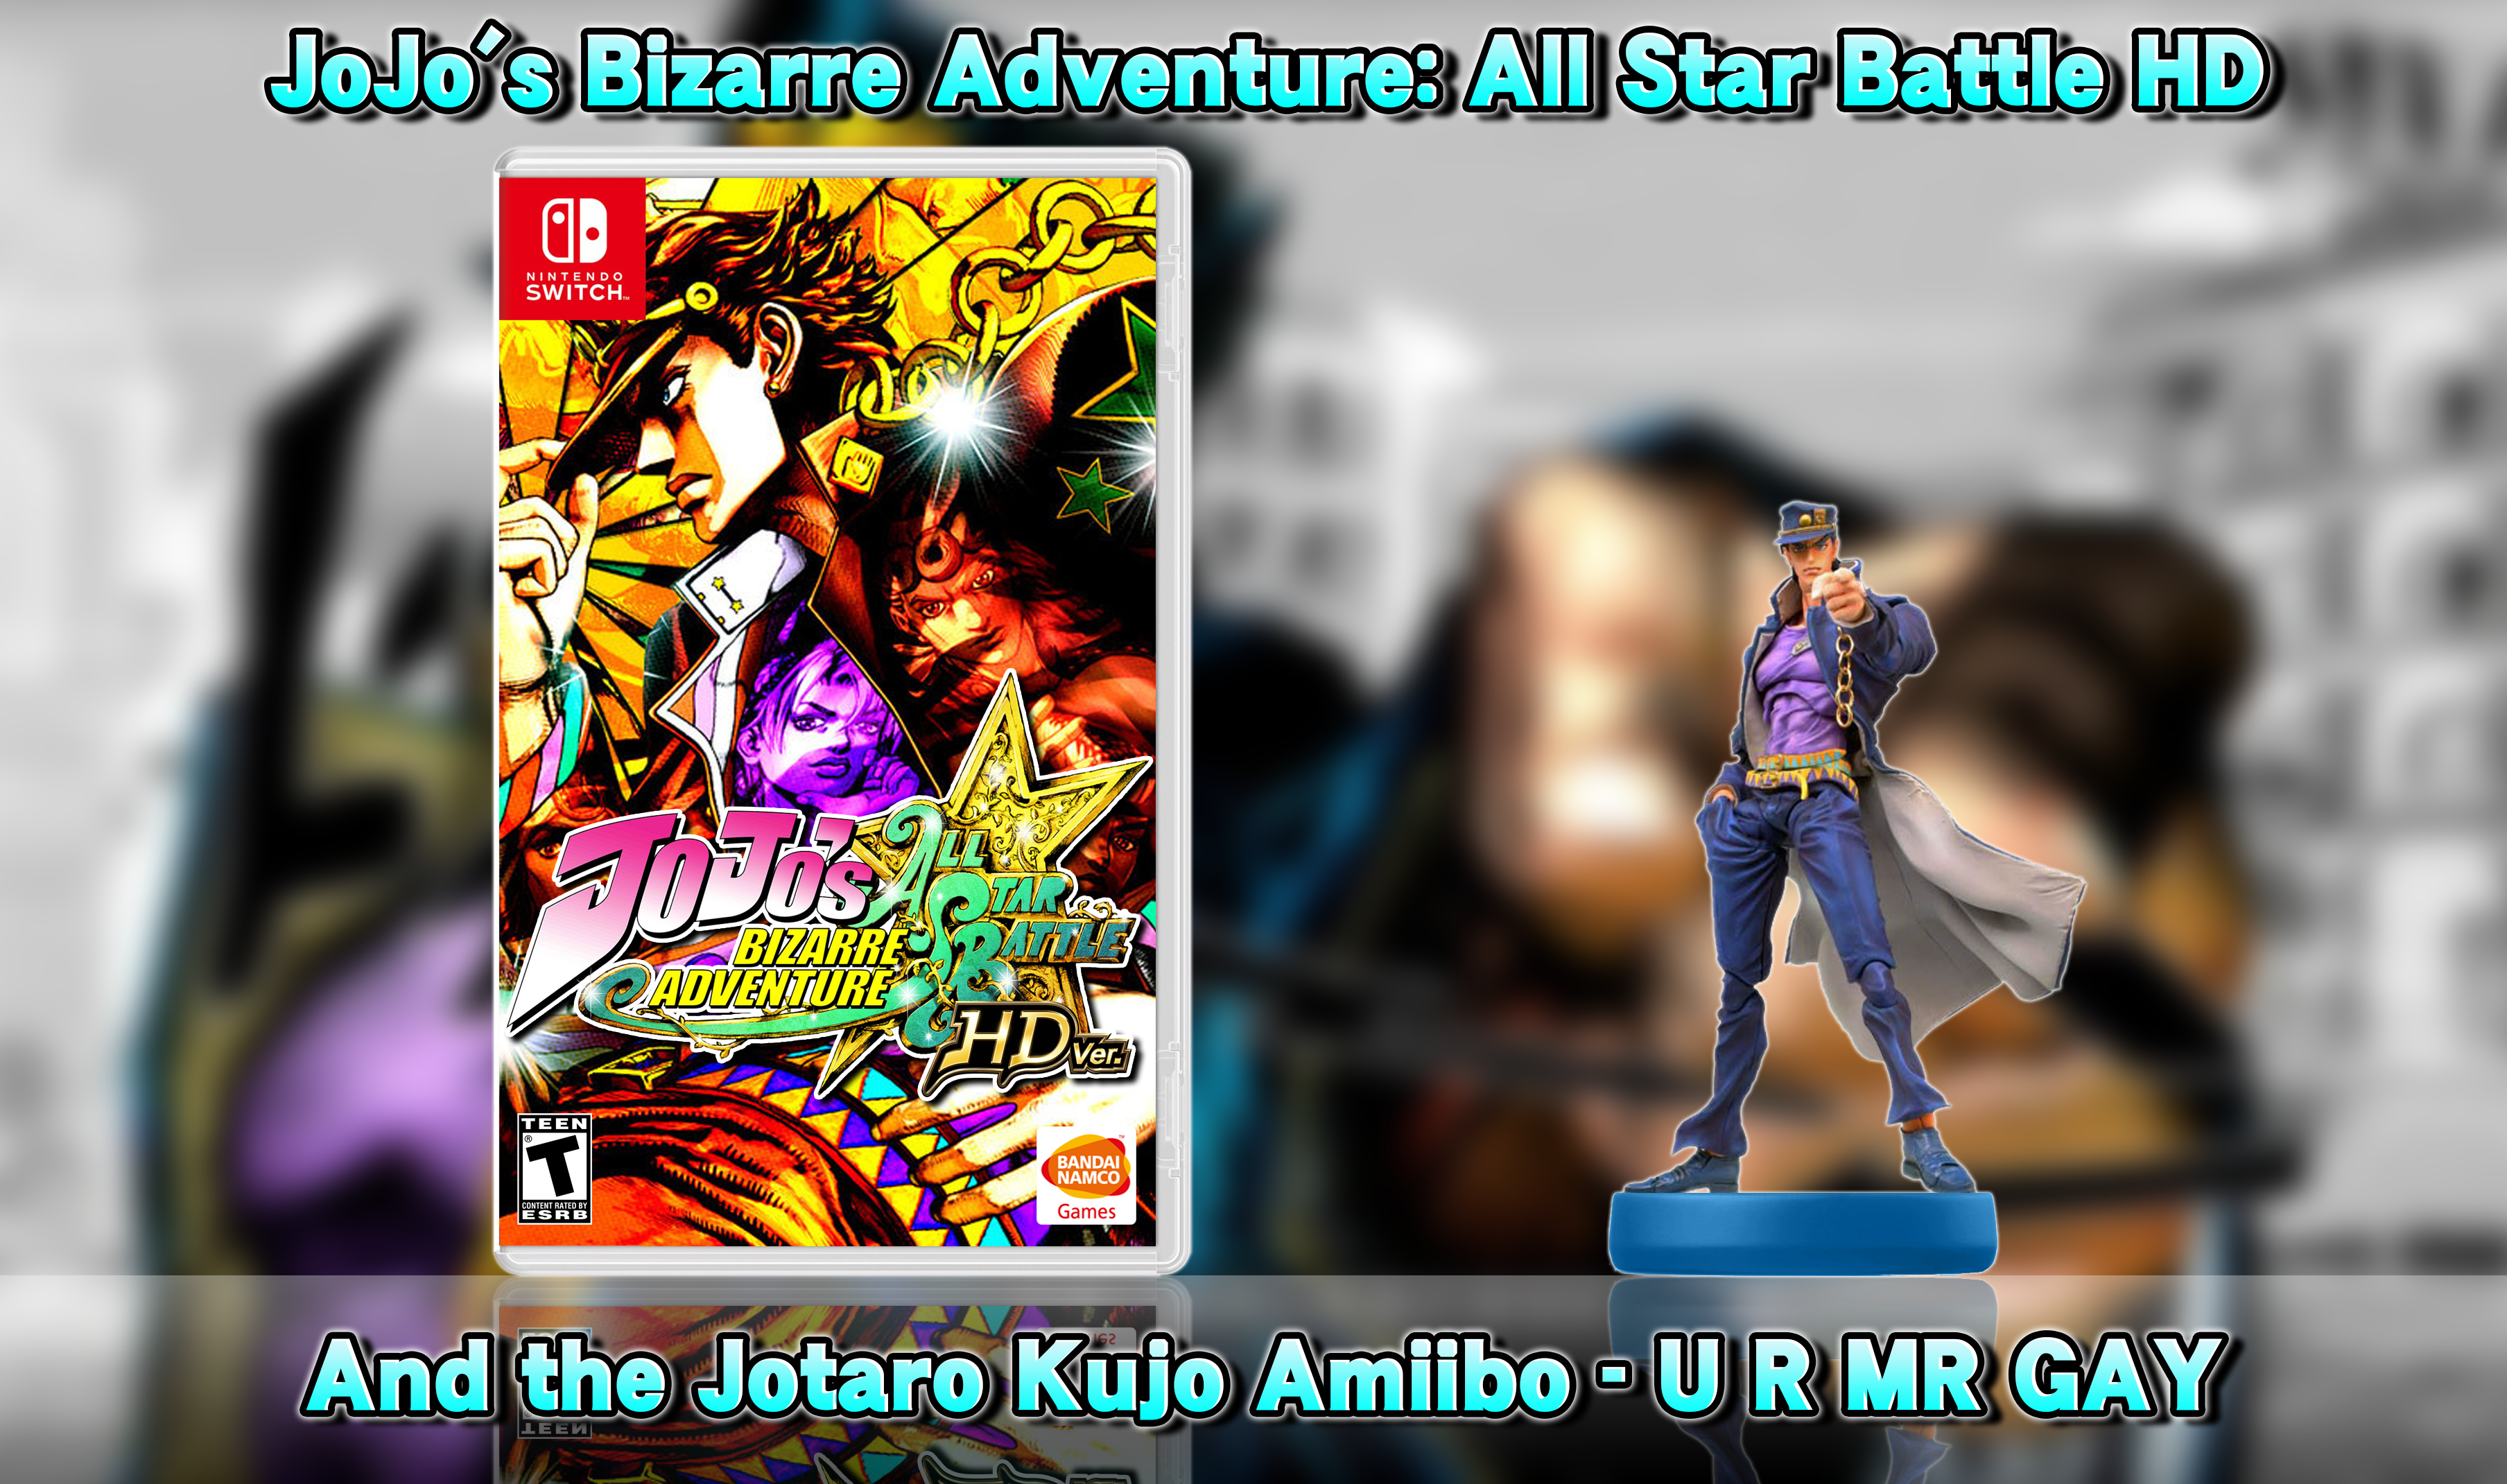 jojos bizarre adventure all star battle r download free